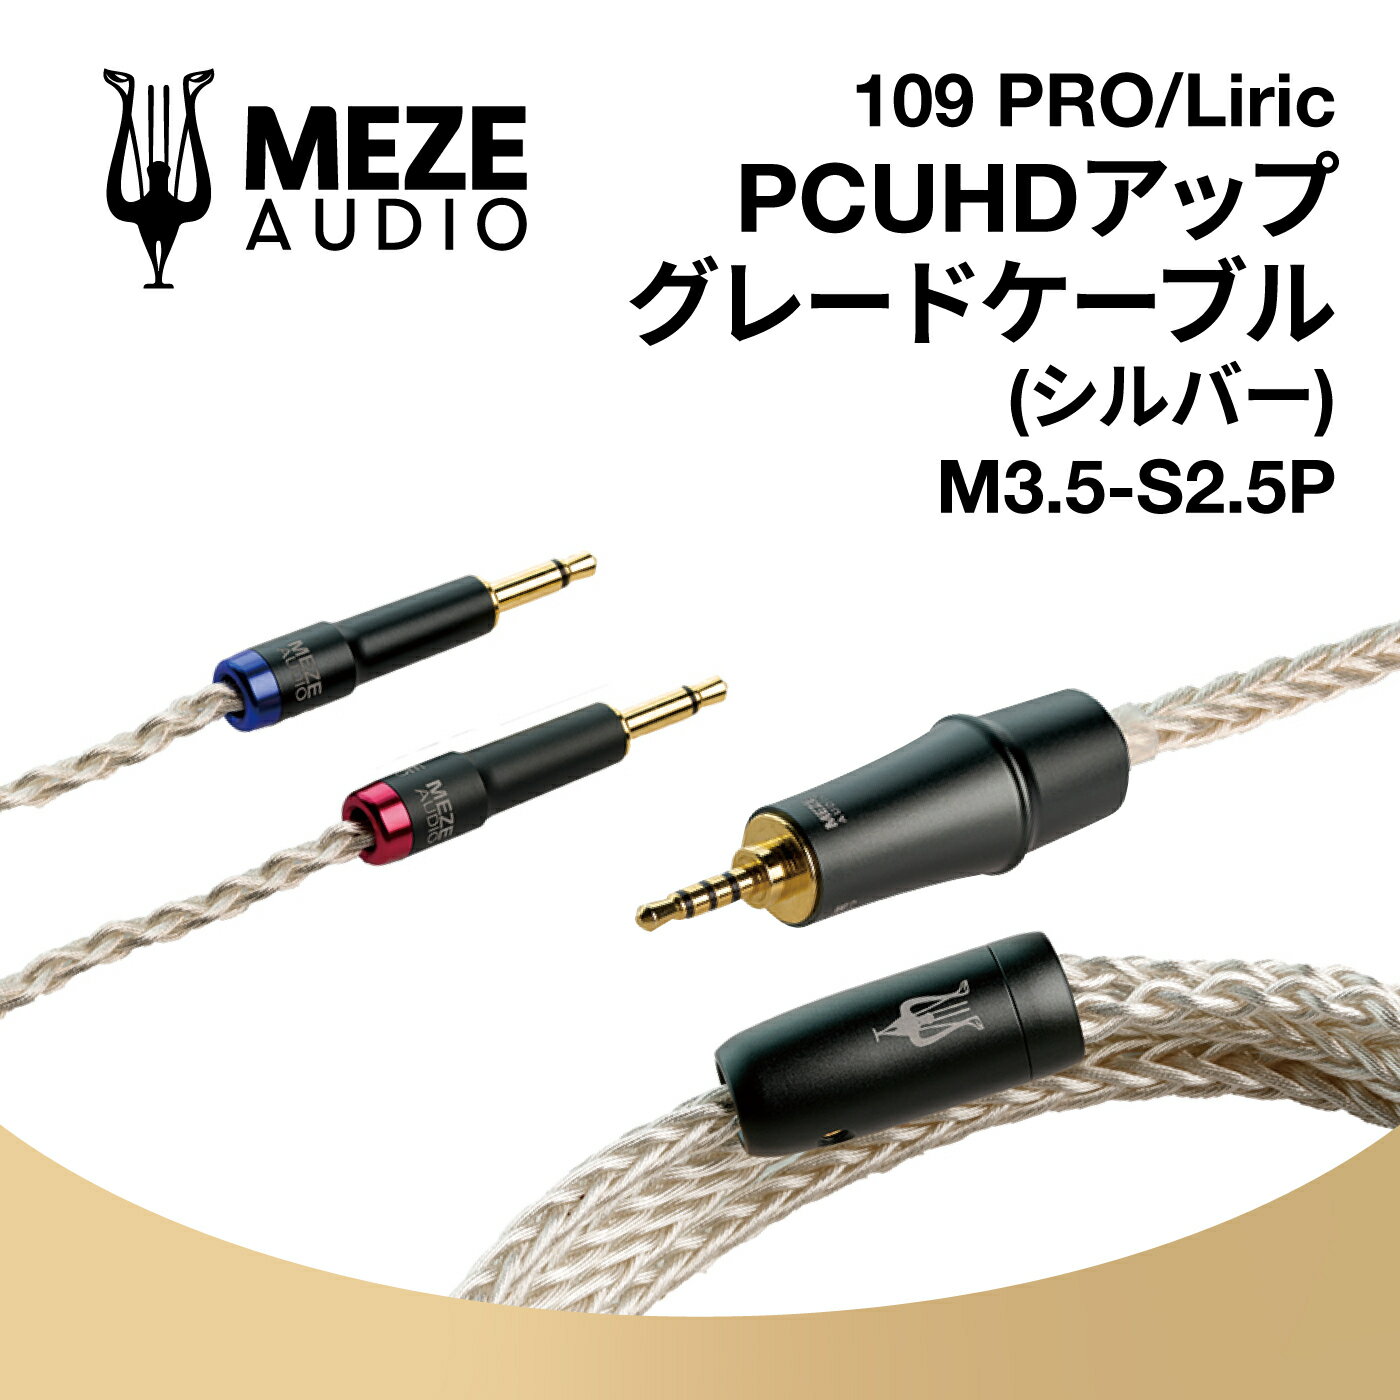 Meze Audio M3.5-S4.4P 3.5mm SILVER-PLATED PCUHD PREMIUM CABLE 4.4mm メゼオーディオ (109 PRO / Liric 対応) 国内正規代理店